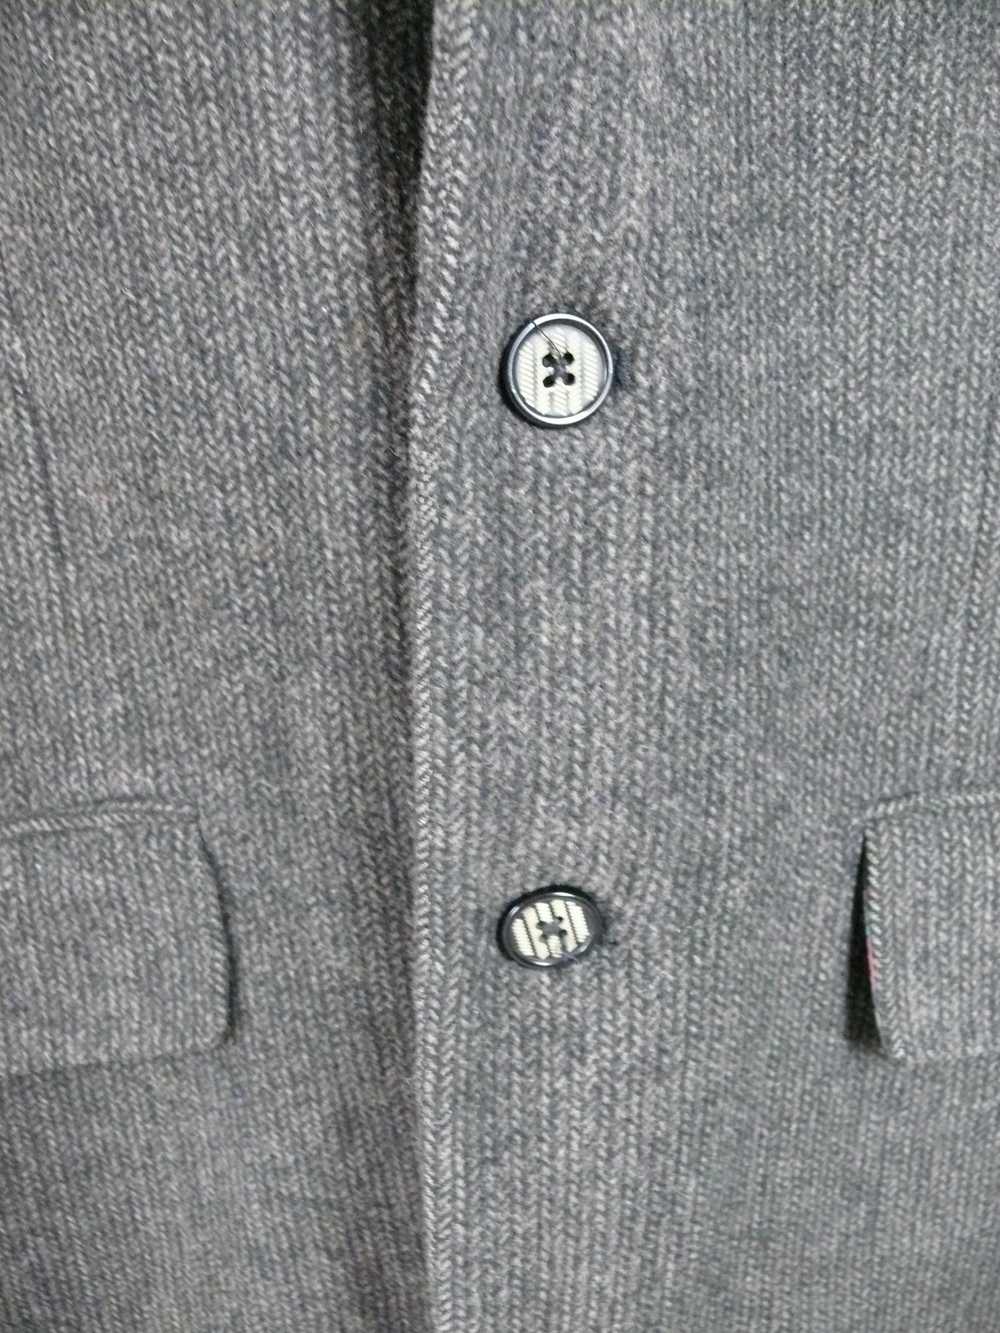 Desigual Rare Desigual Wool Blend Jacket Blazer - image 5